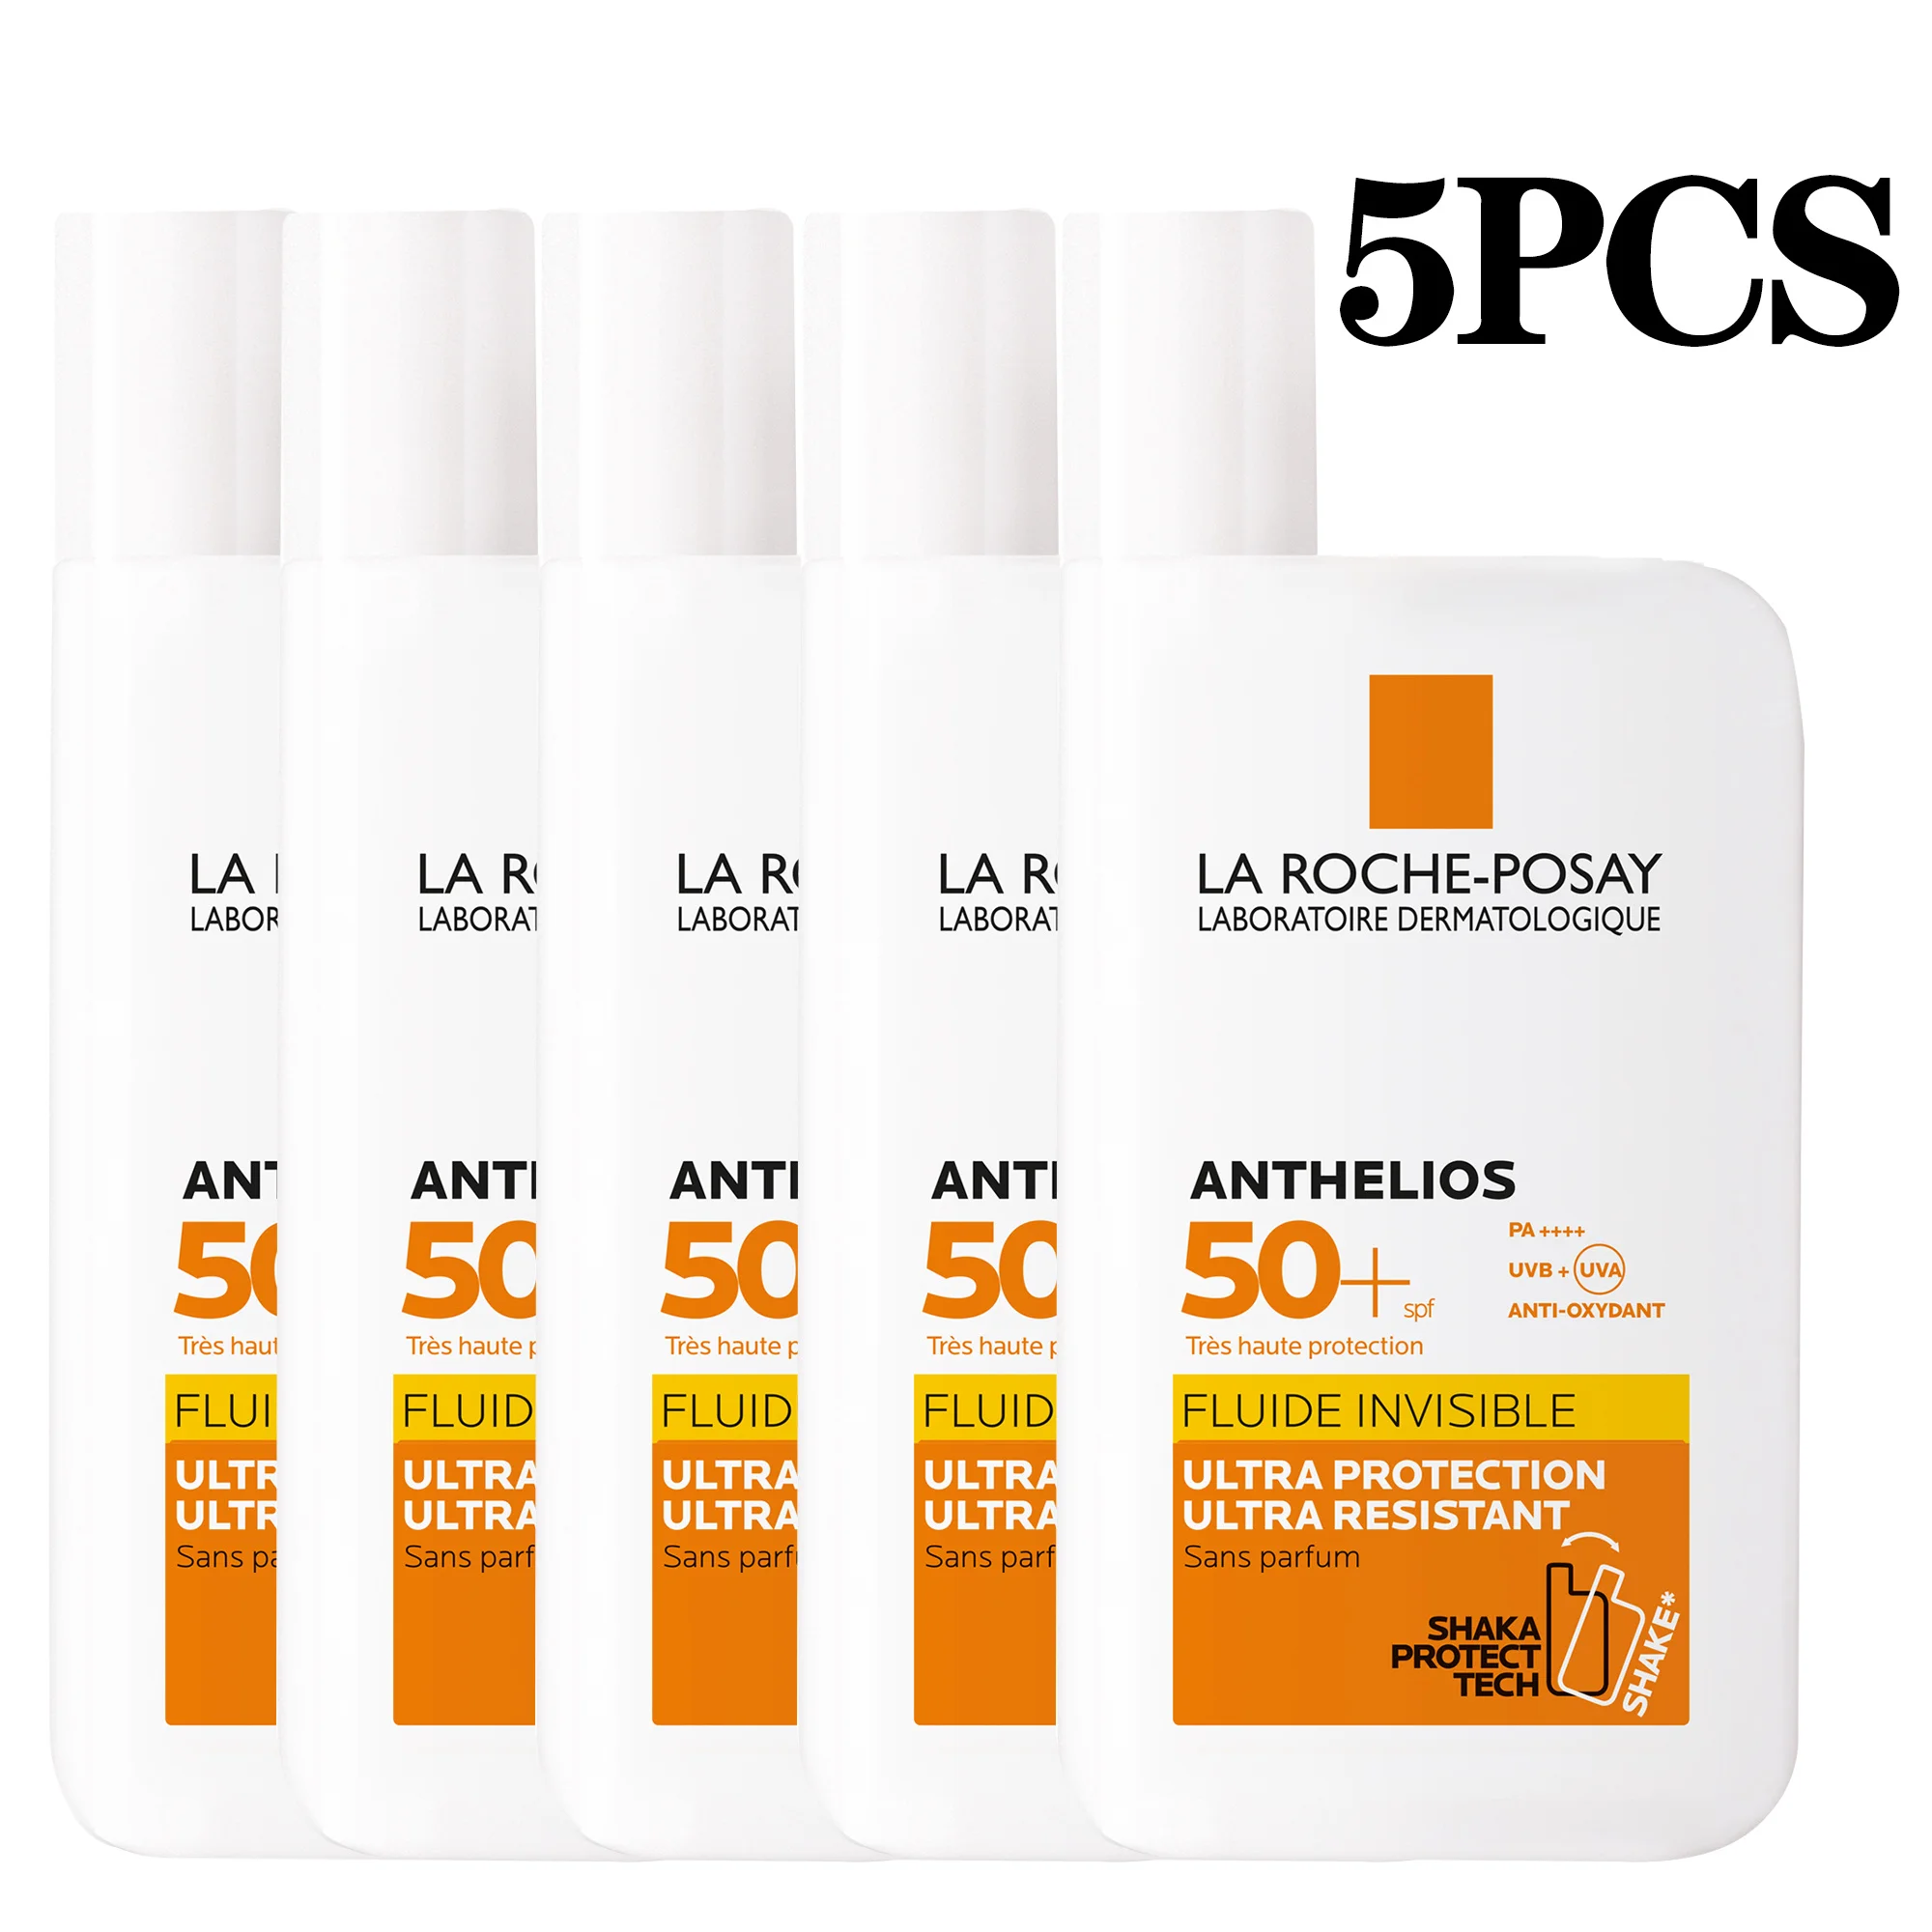 5PCS La Roche Posay Sunscreen SPF 50+ Face Sunscreen Oil-Free Ultra-Light Fluid Broad Spectrum Universal Tint Body Sunscreen